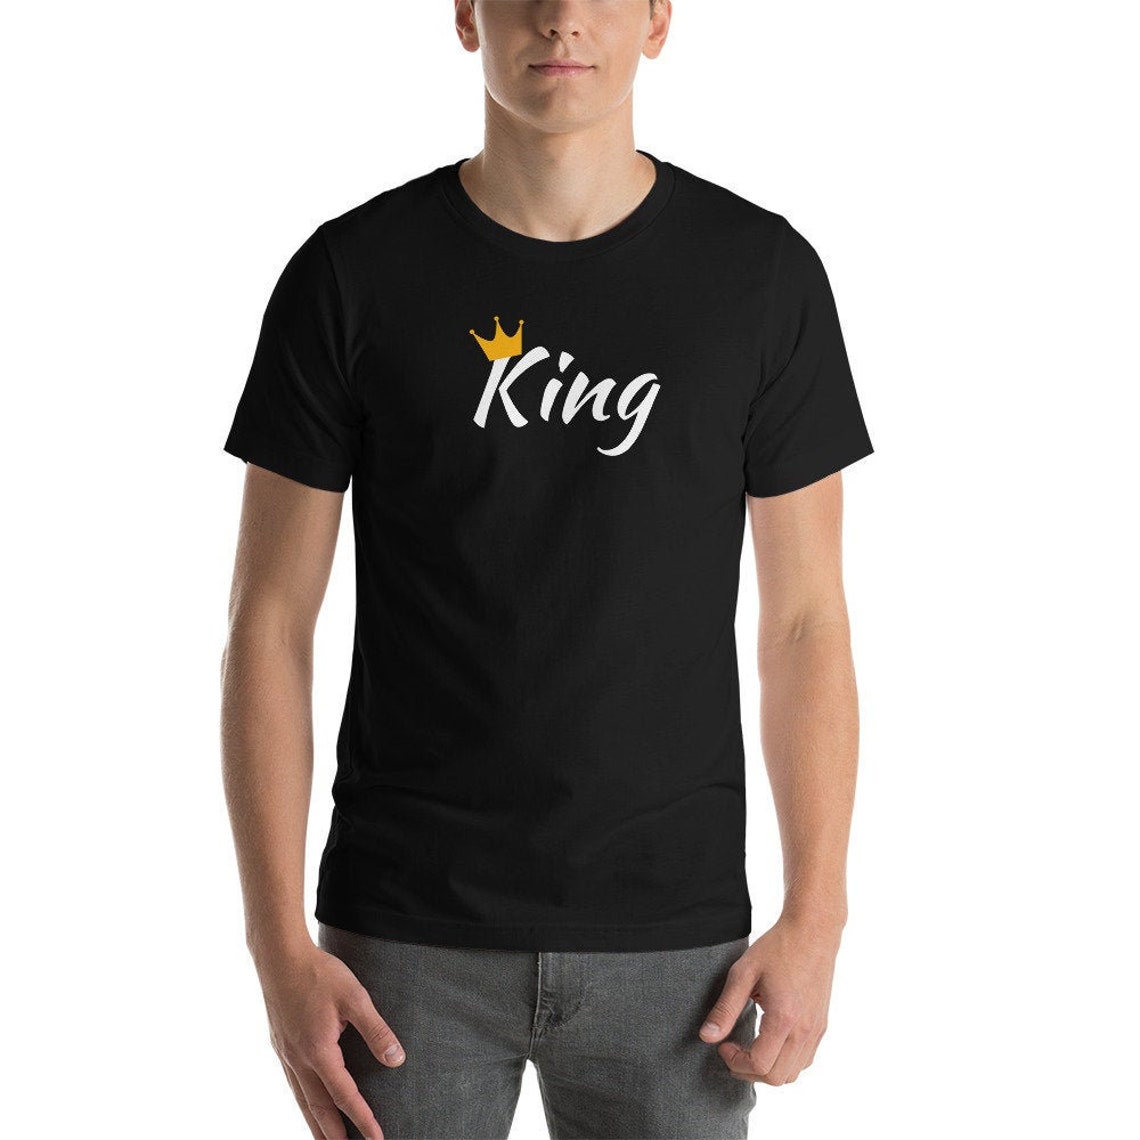 Royal King Crown Shirt Royalty tshirts Crown tshirts Royal | Etsy